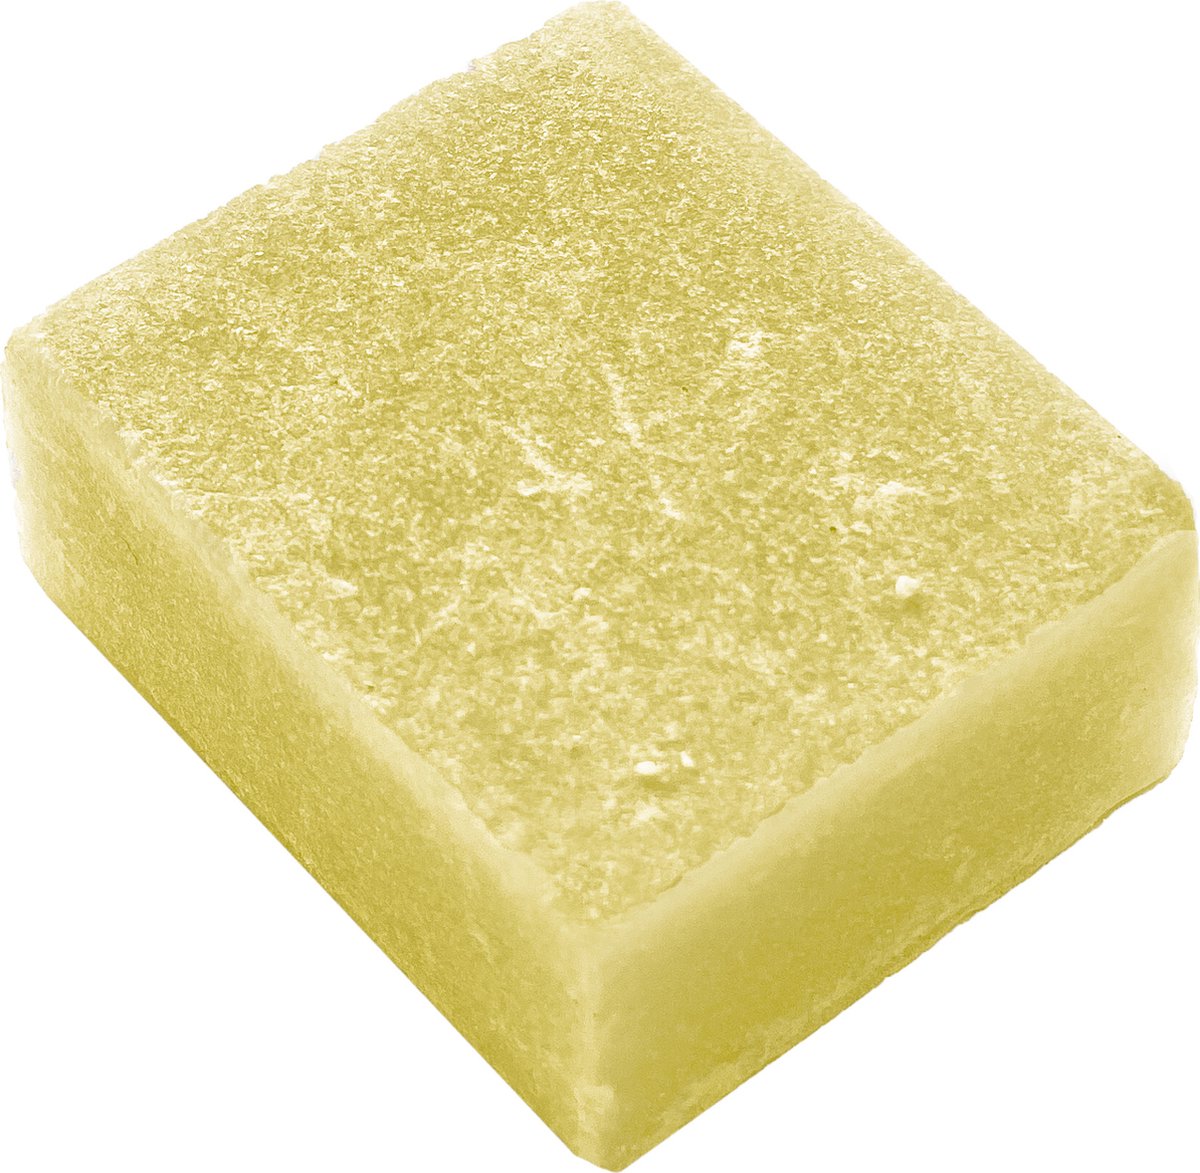 Geurblokje / amberblokje Lemon Grass - amberblokjes - huisparfum - geurverspreider